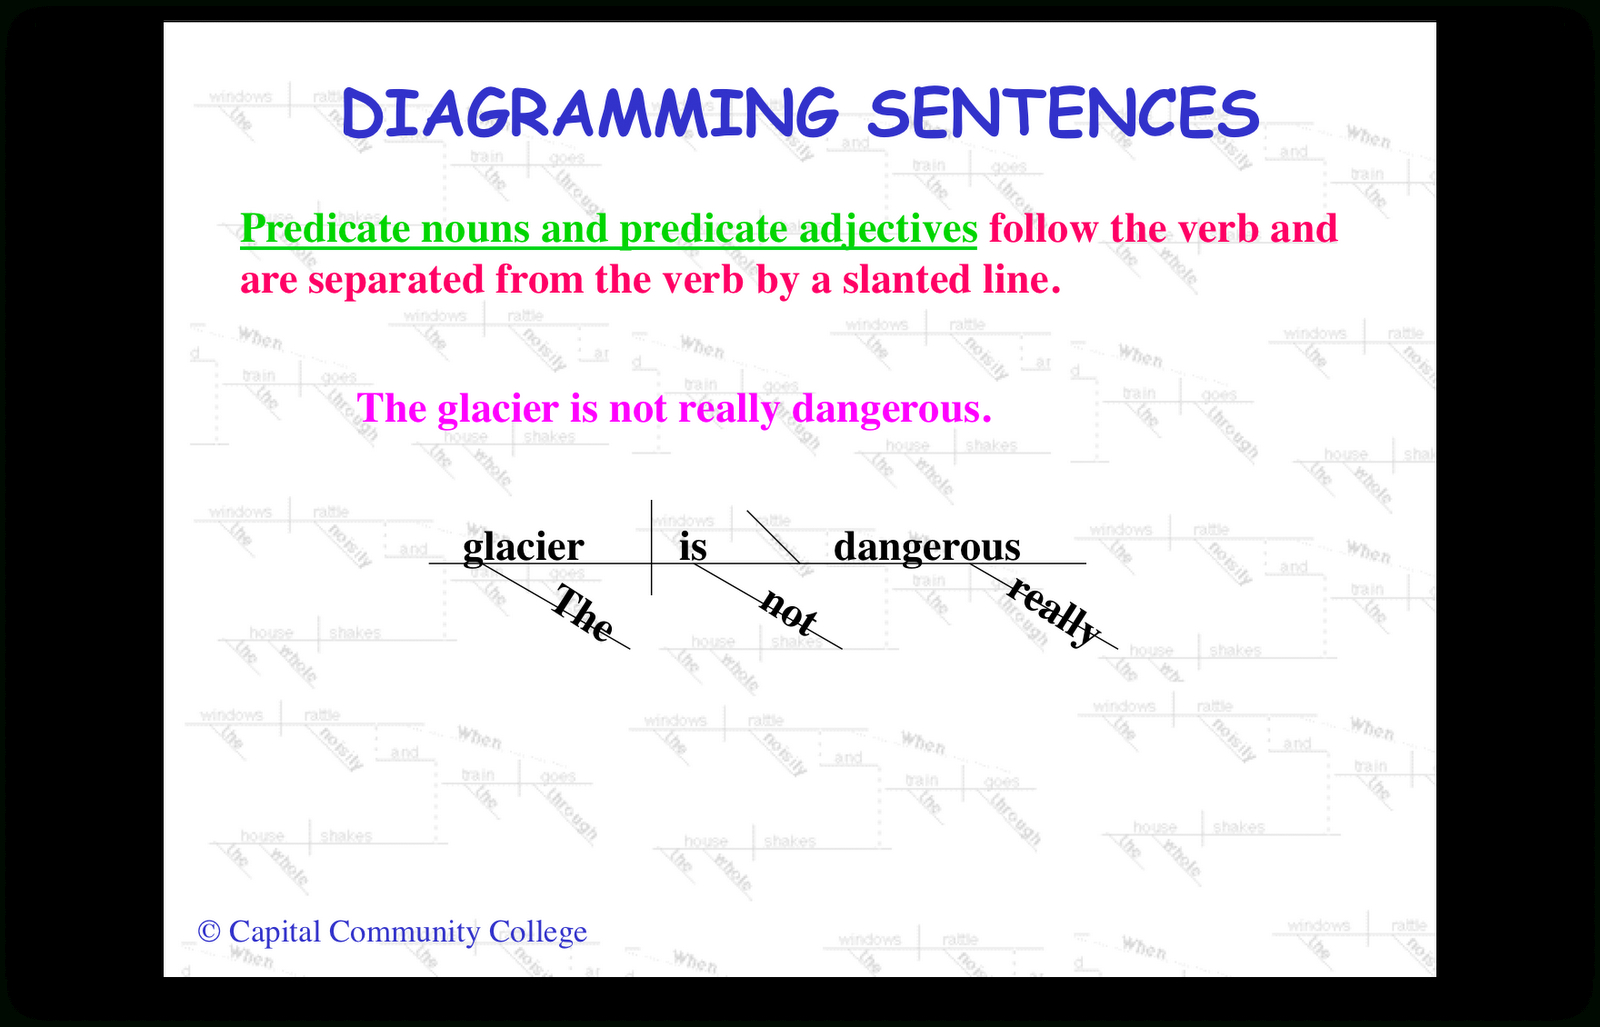 Free Printable Sentence Diagramming Worksheets Free Printable